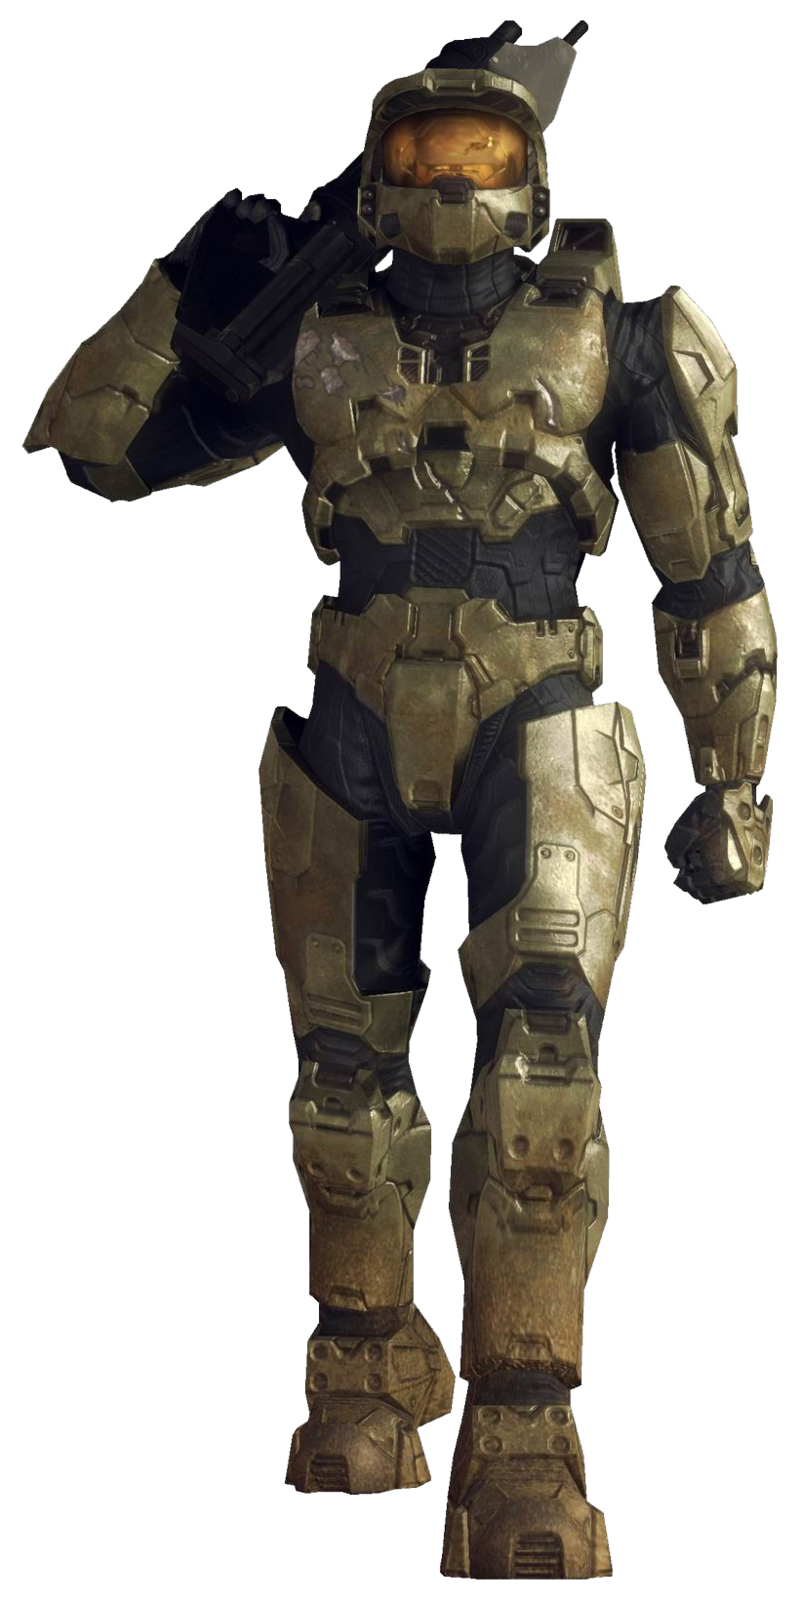 Halo 4 Master Chiefs New Armor